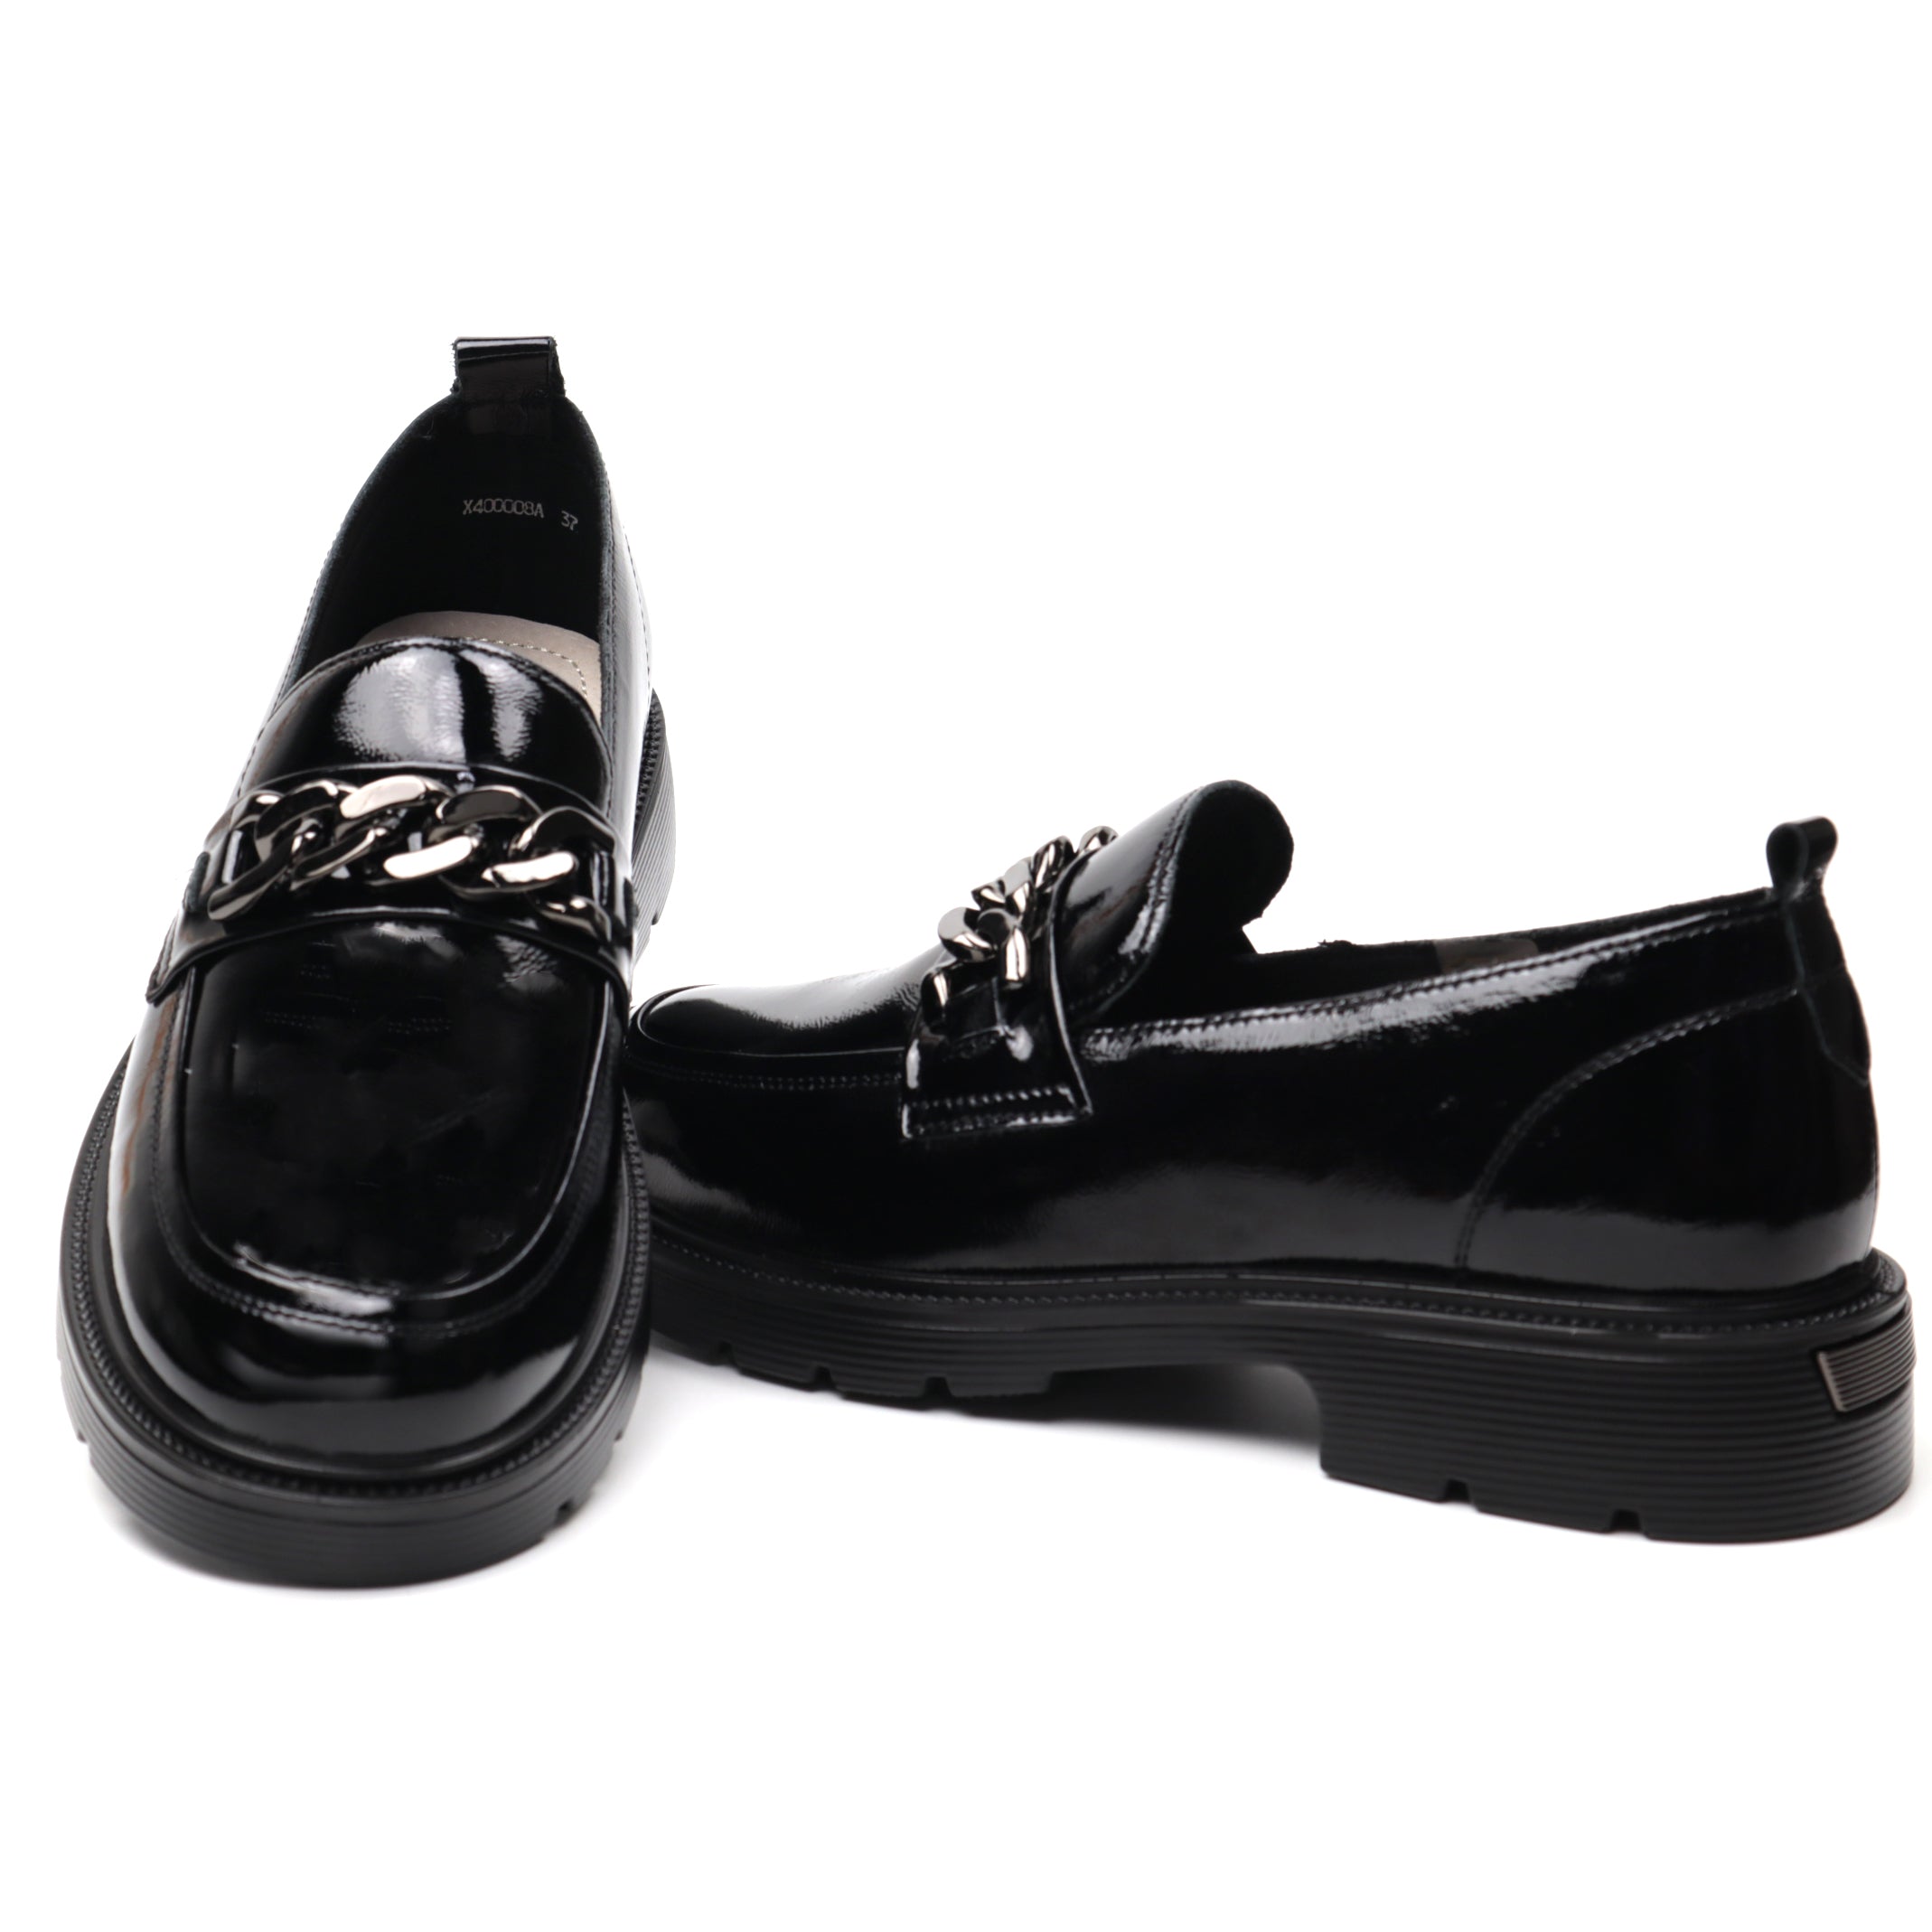 Pass Collection Pantofi dama X4X400008A 01 L negru lac ID3082-NGL